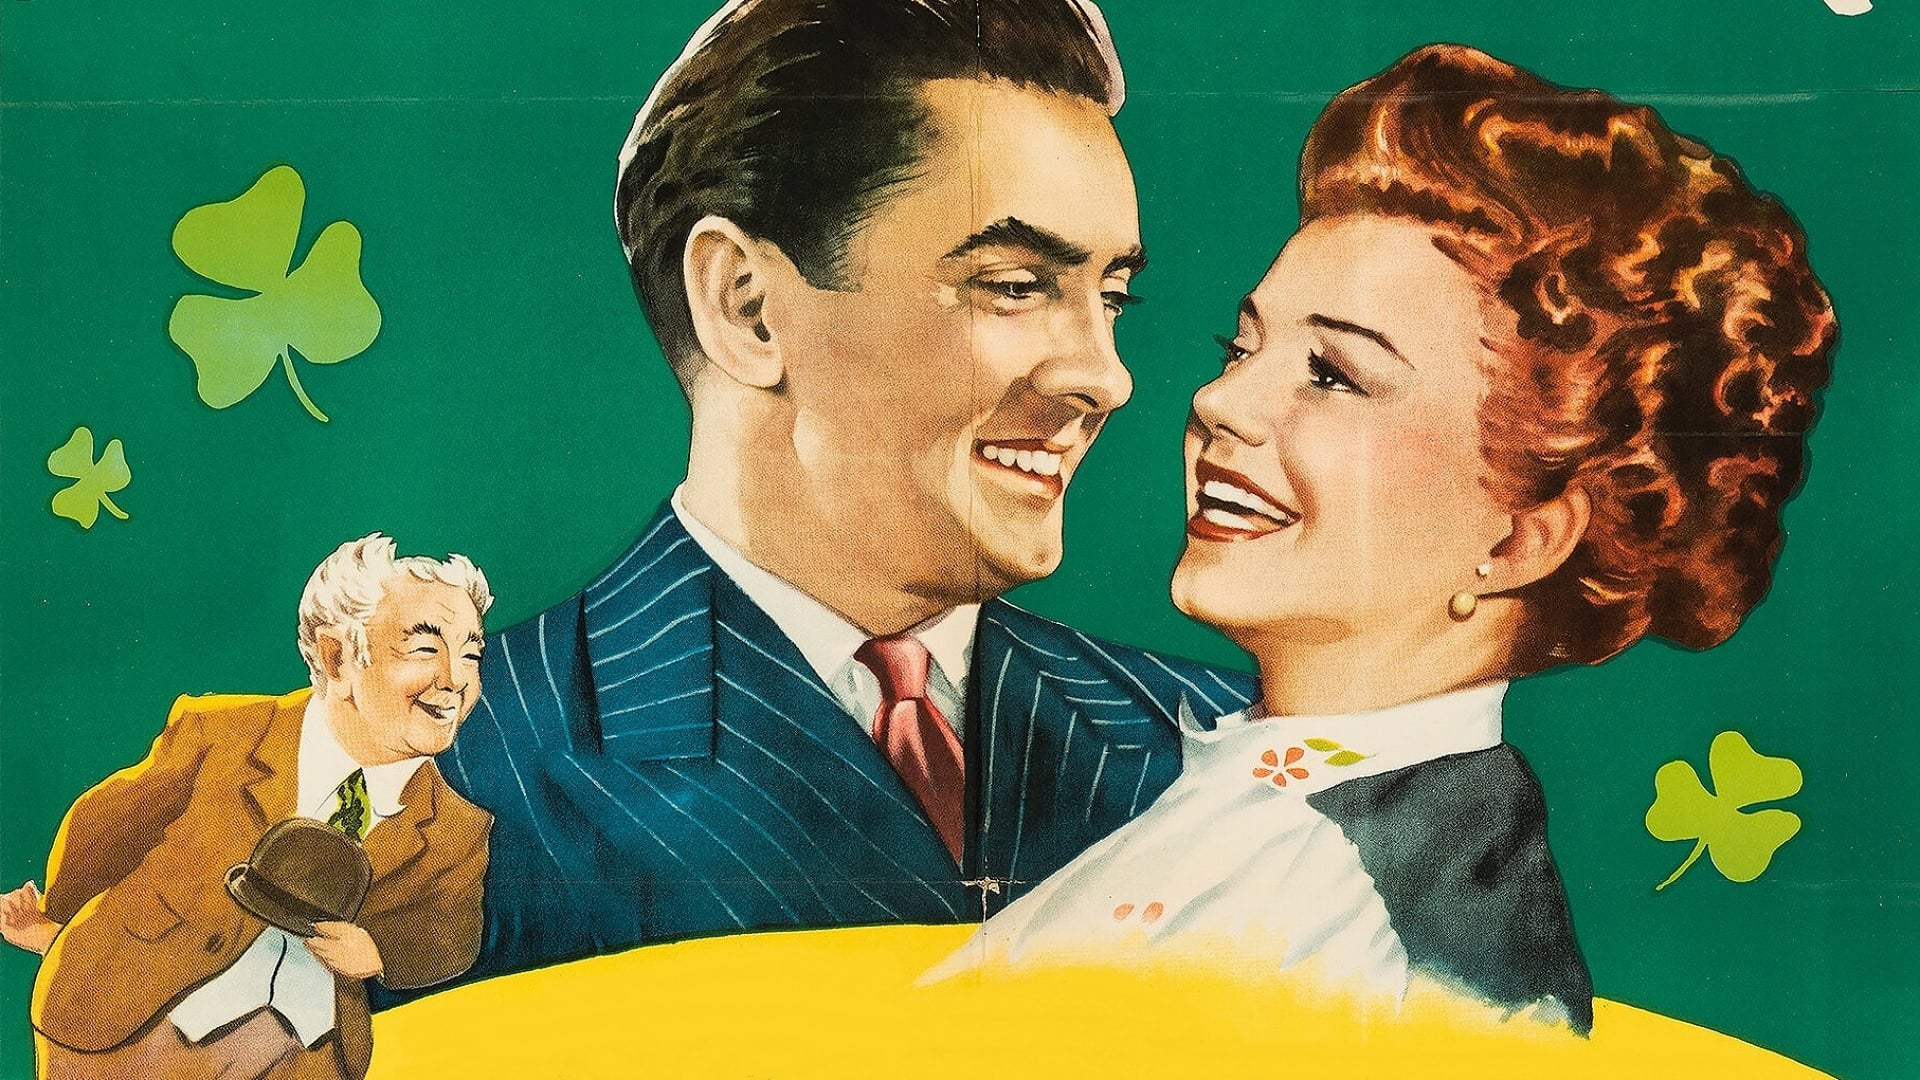 The Luck of the Irish (1948)